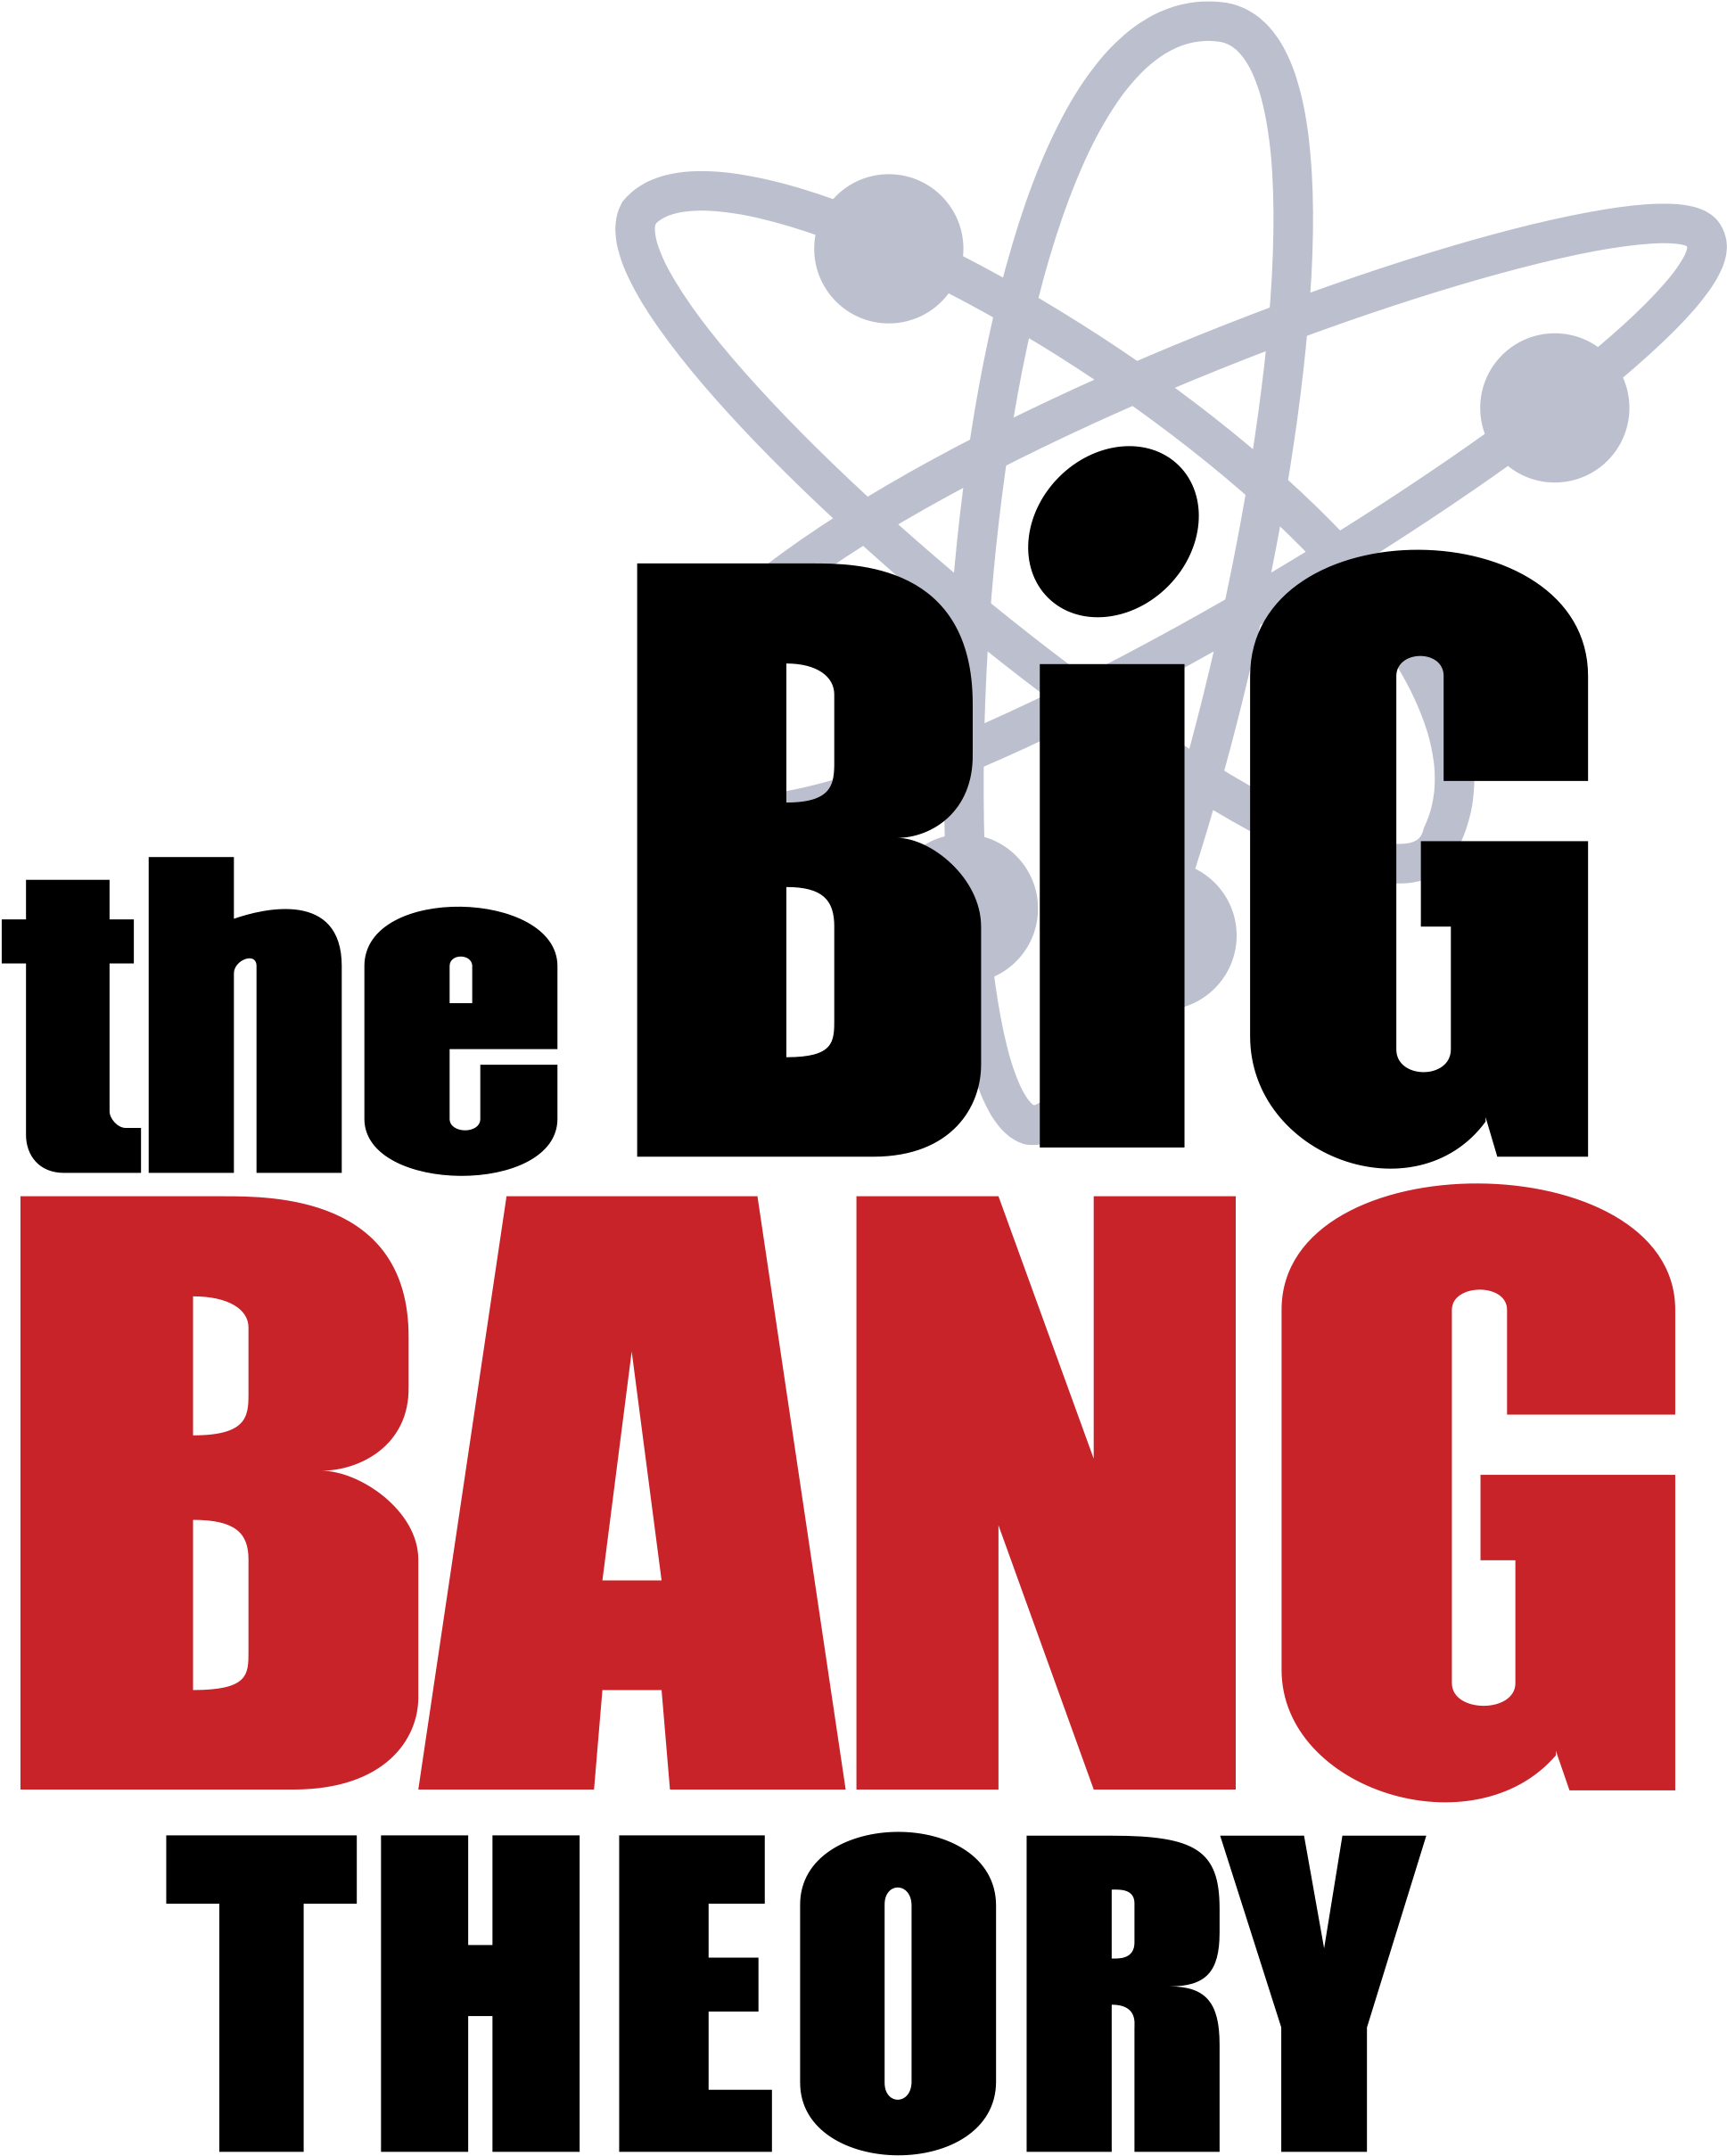 Big Ban Theory Logo Ideas - Big Bang Theory Tv Show Logo (2000x2472), Png Download